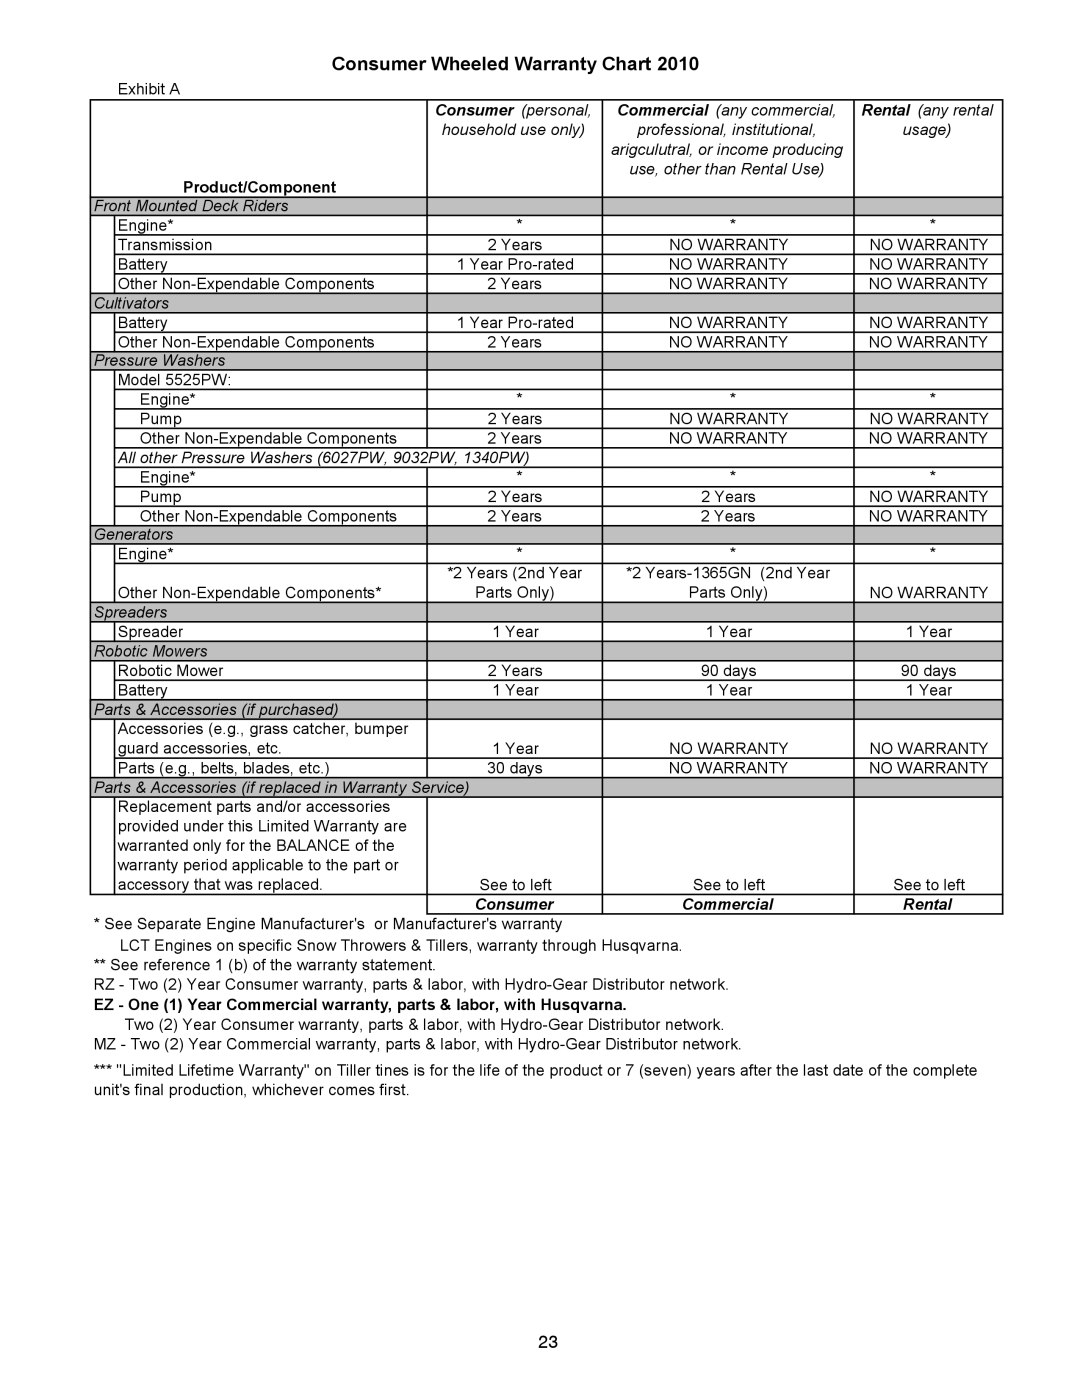 Husqvarna 96193006400, 11527SB manual Consumer Wheeled Warranty Chart, Product/Component, Rental 